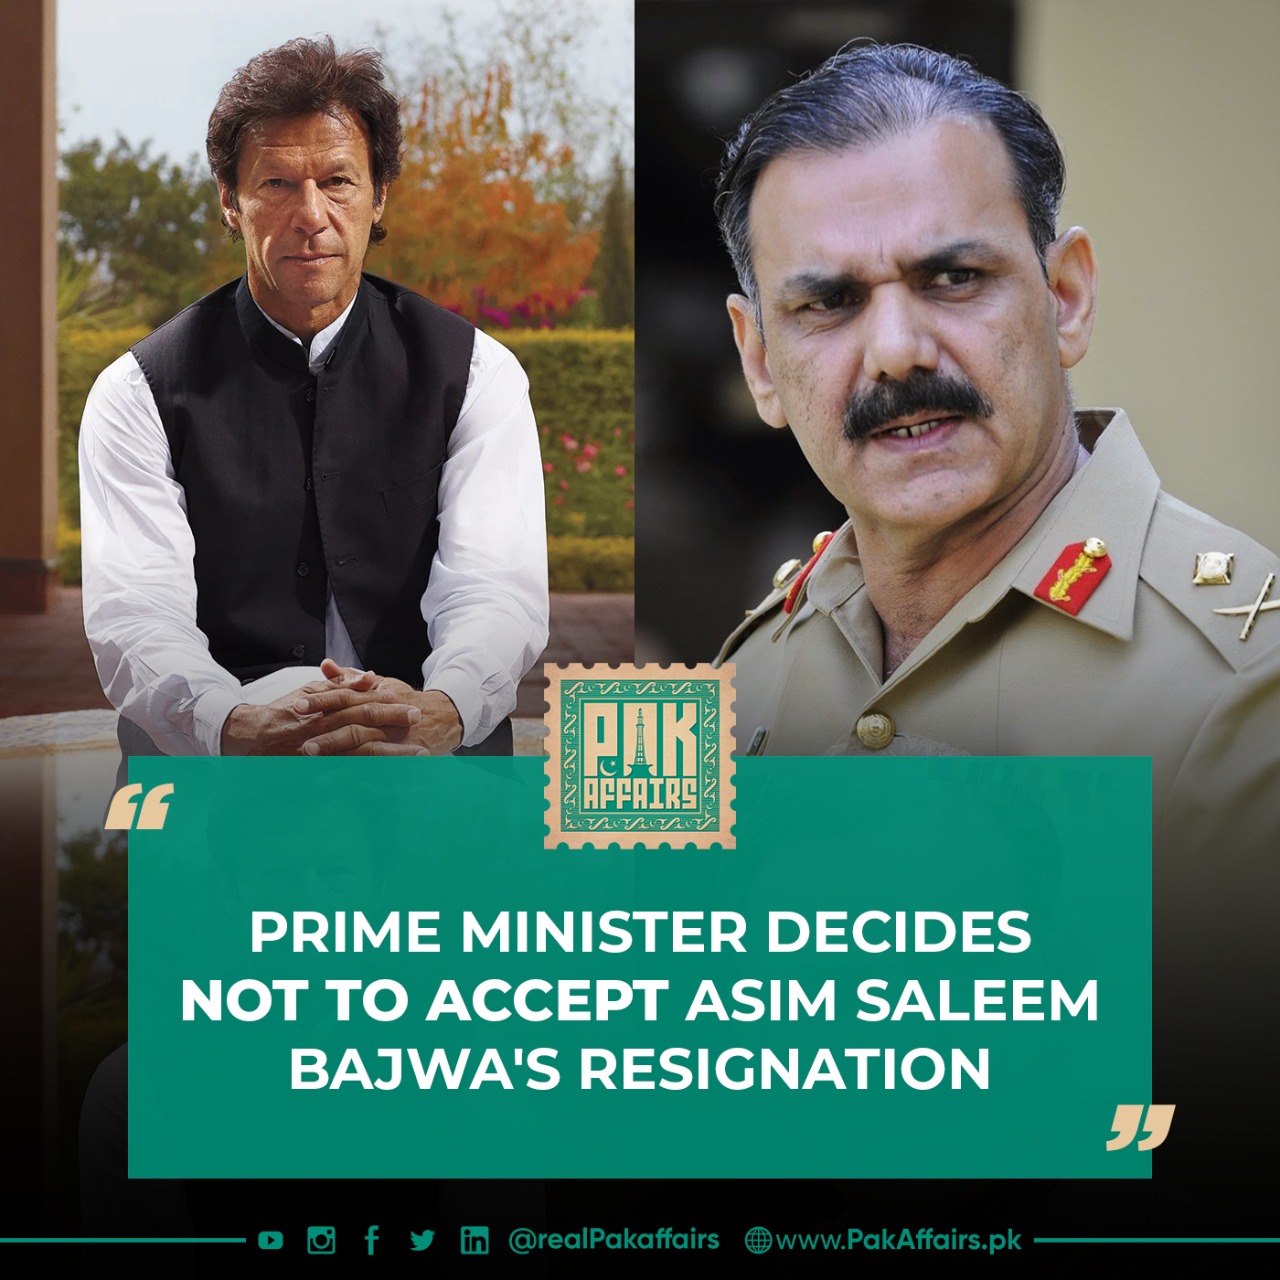 Prime Minister decides not to accept Asim Saleem Bajwa's resignation